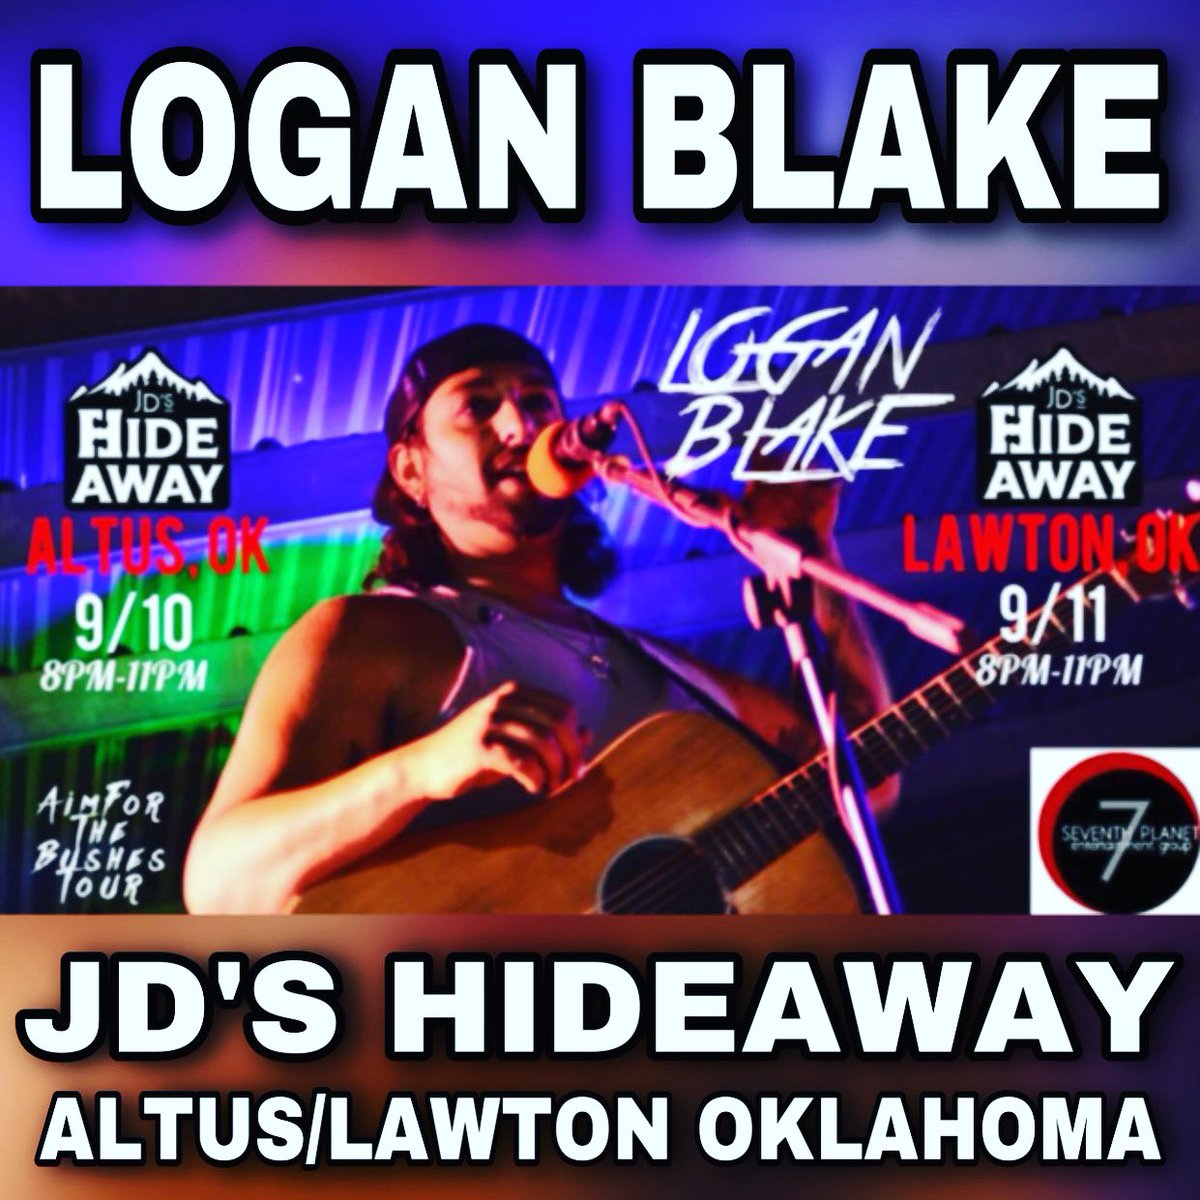 ⭐️ Fri/Sat 9/10-911: Logan Blake live at JD's Hideaway Altus & JD's Hideaway Lawton!  #livemusic #oklahomalivemusic #oklahomamusicscene #musicmedia